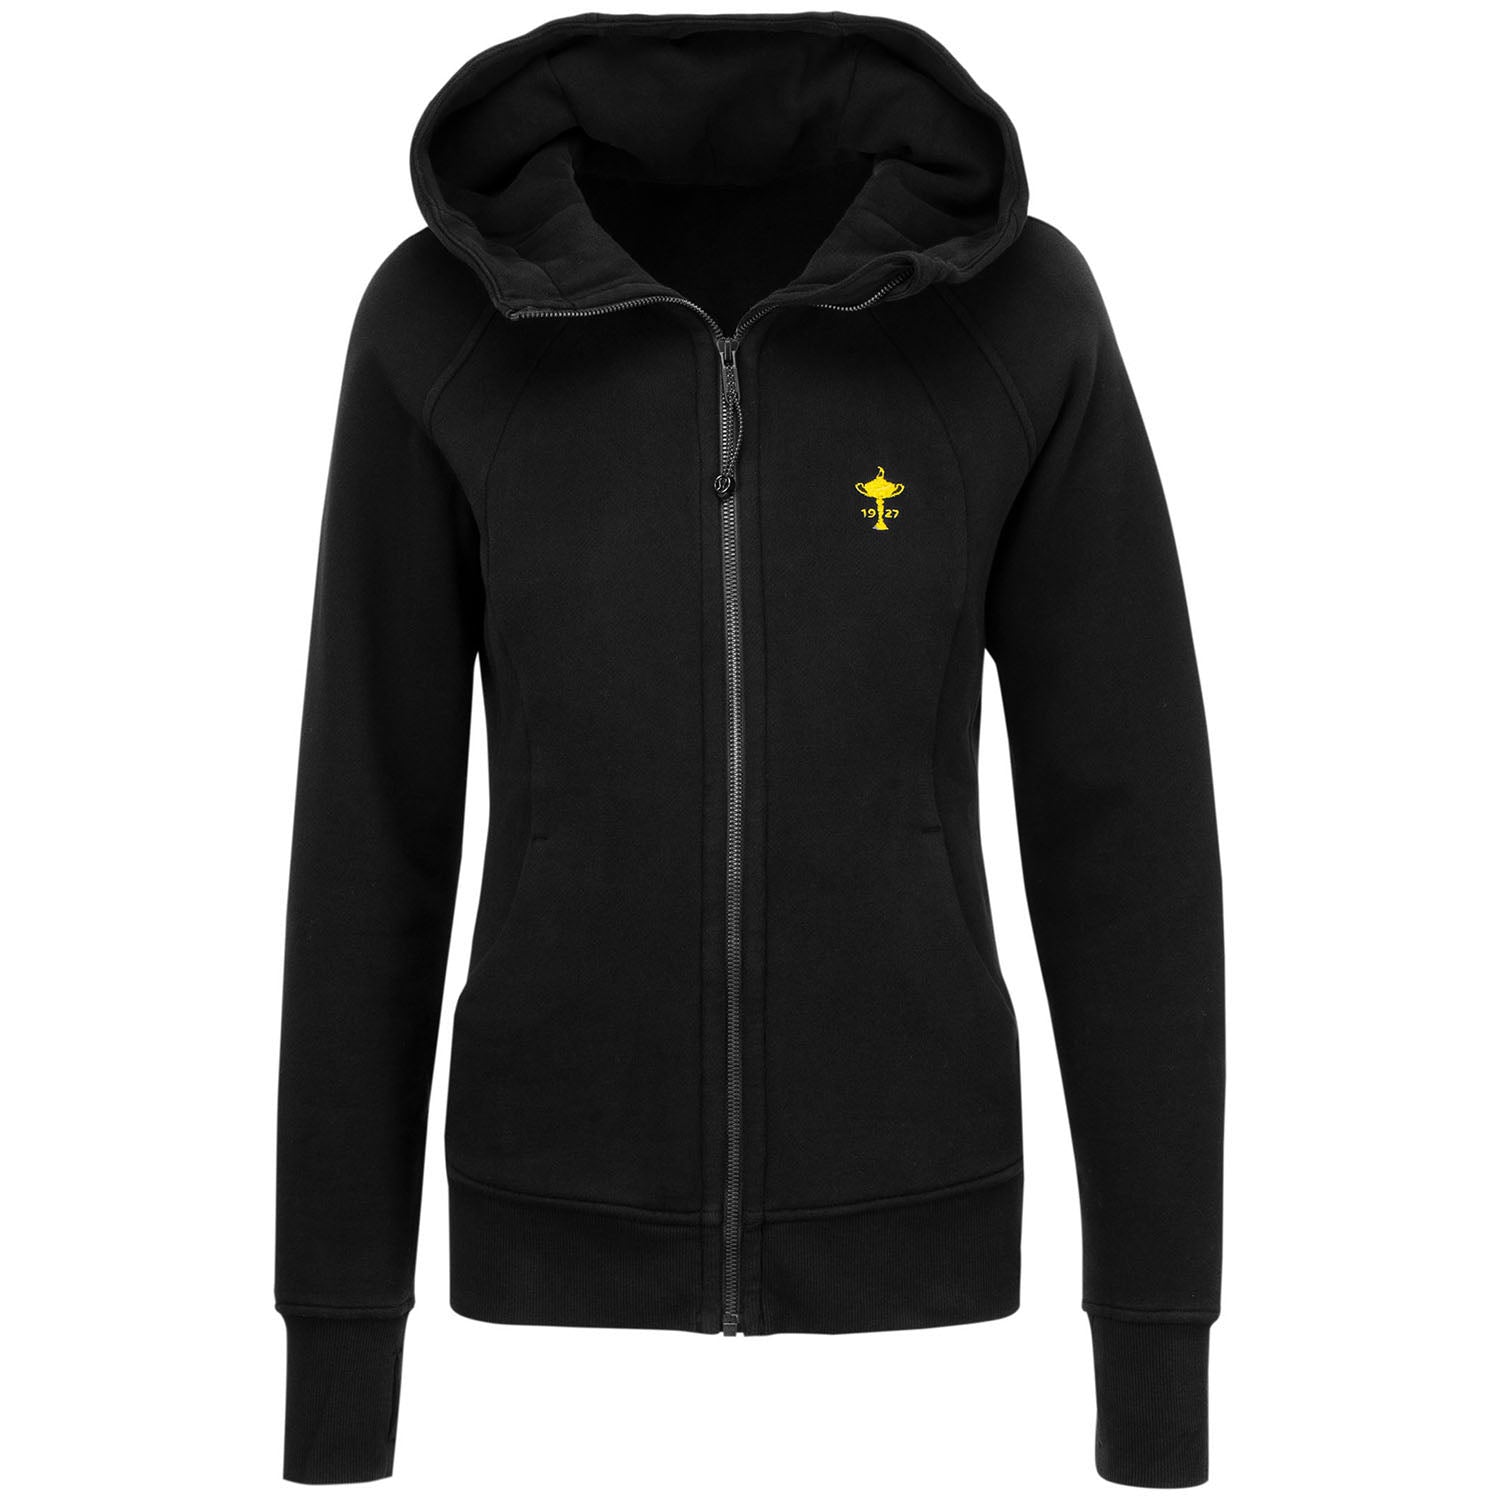 Lululemon running sweatshirt Black Size 2 - $36 (53% Off Retail) - From  Keely